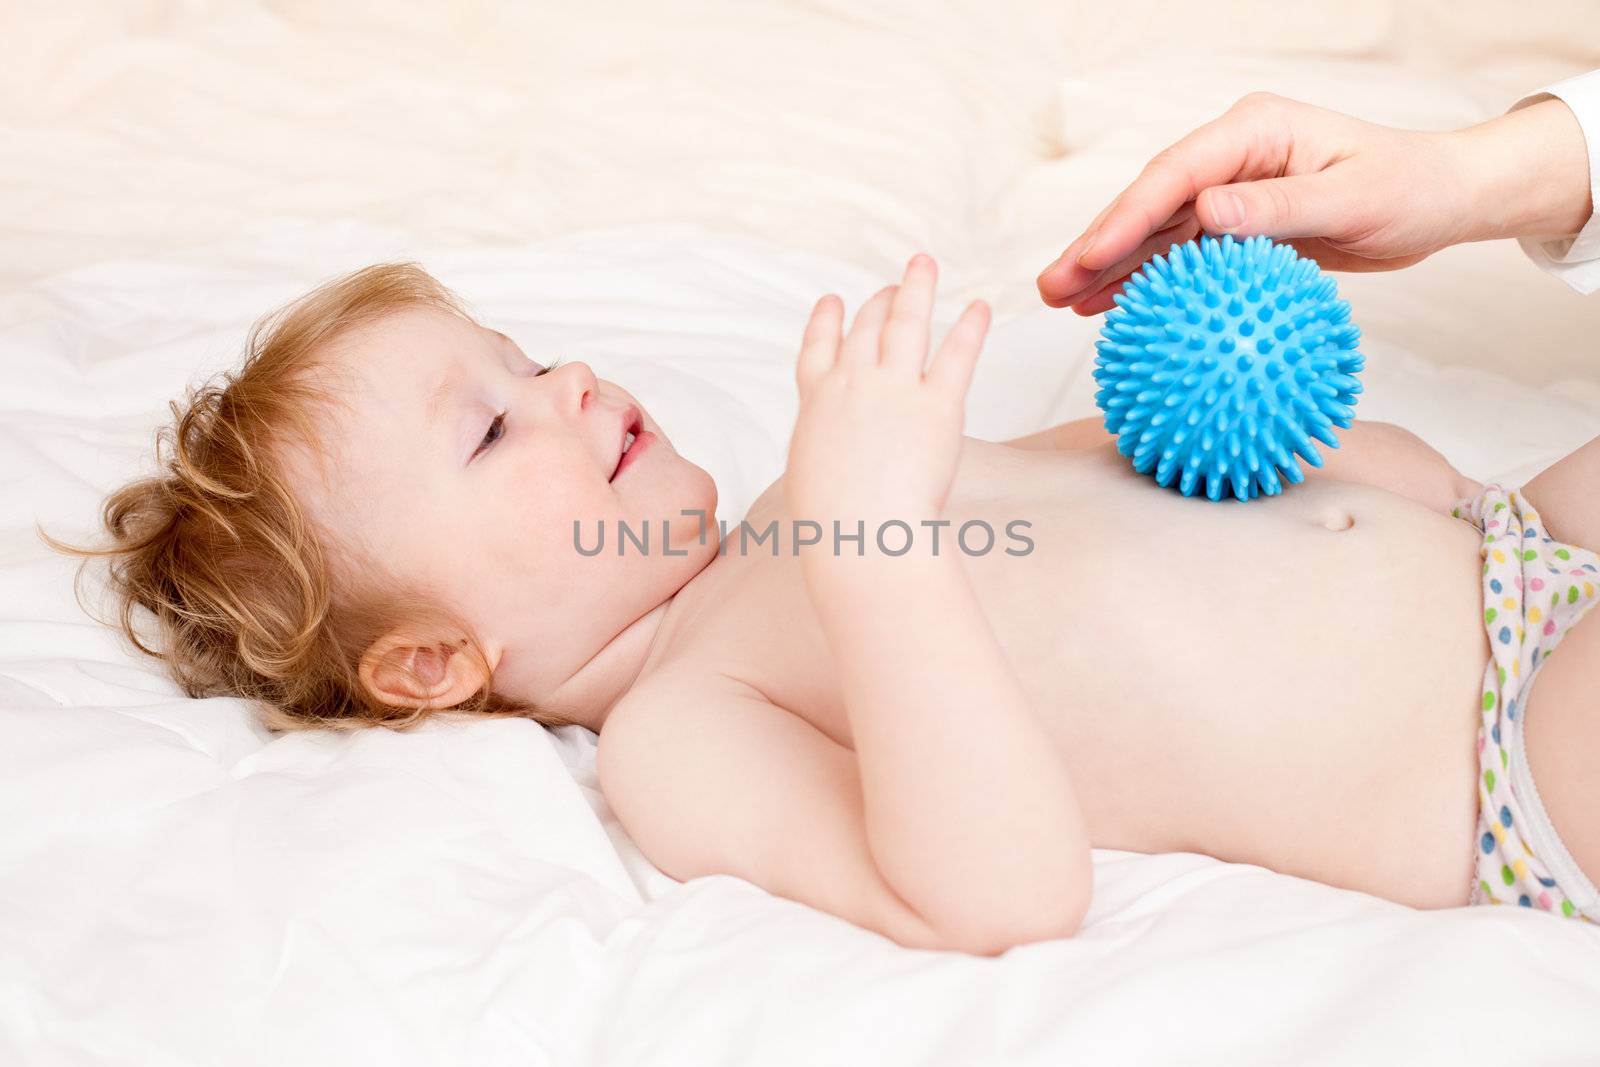 Masseur massaging little girl with rubber device, shallow focus